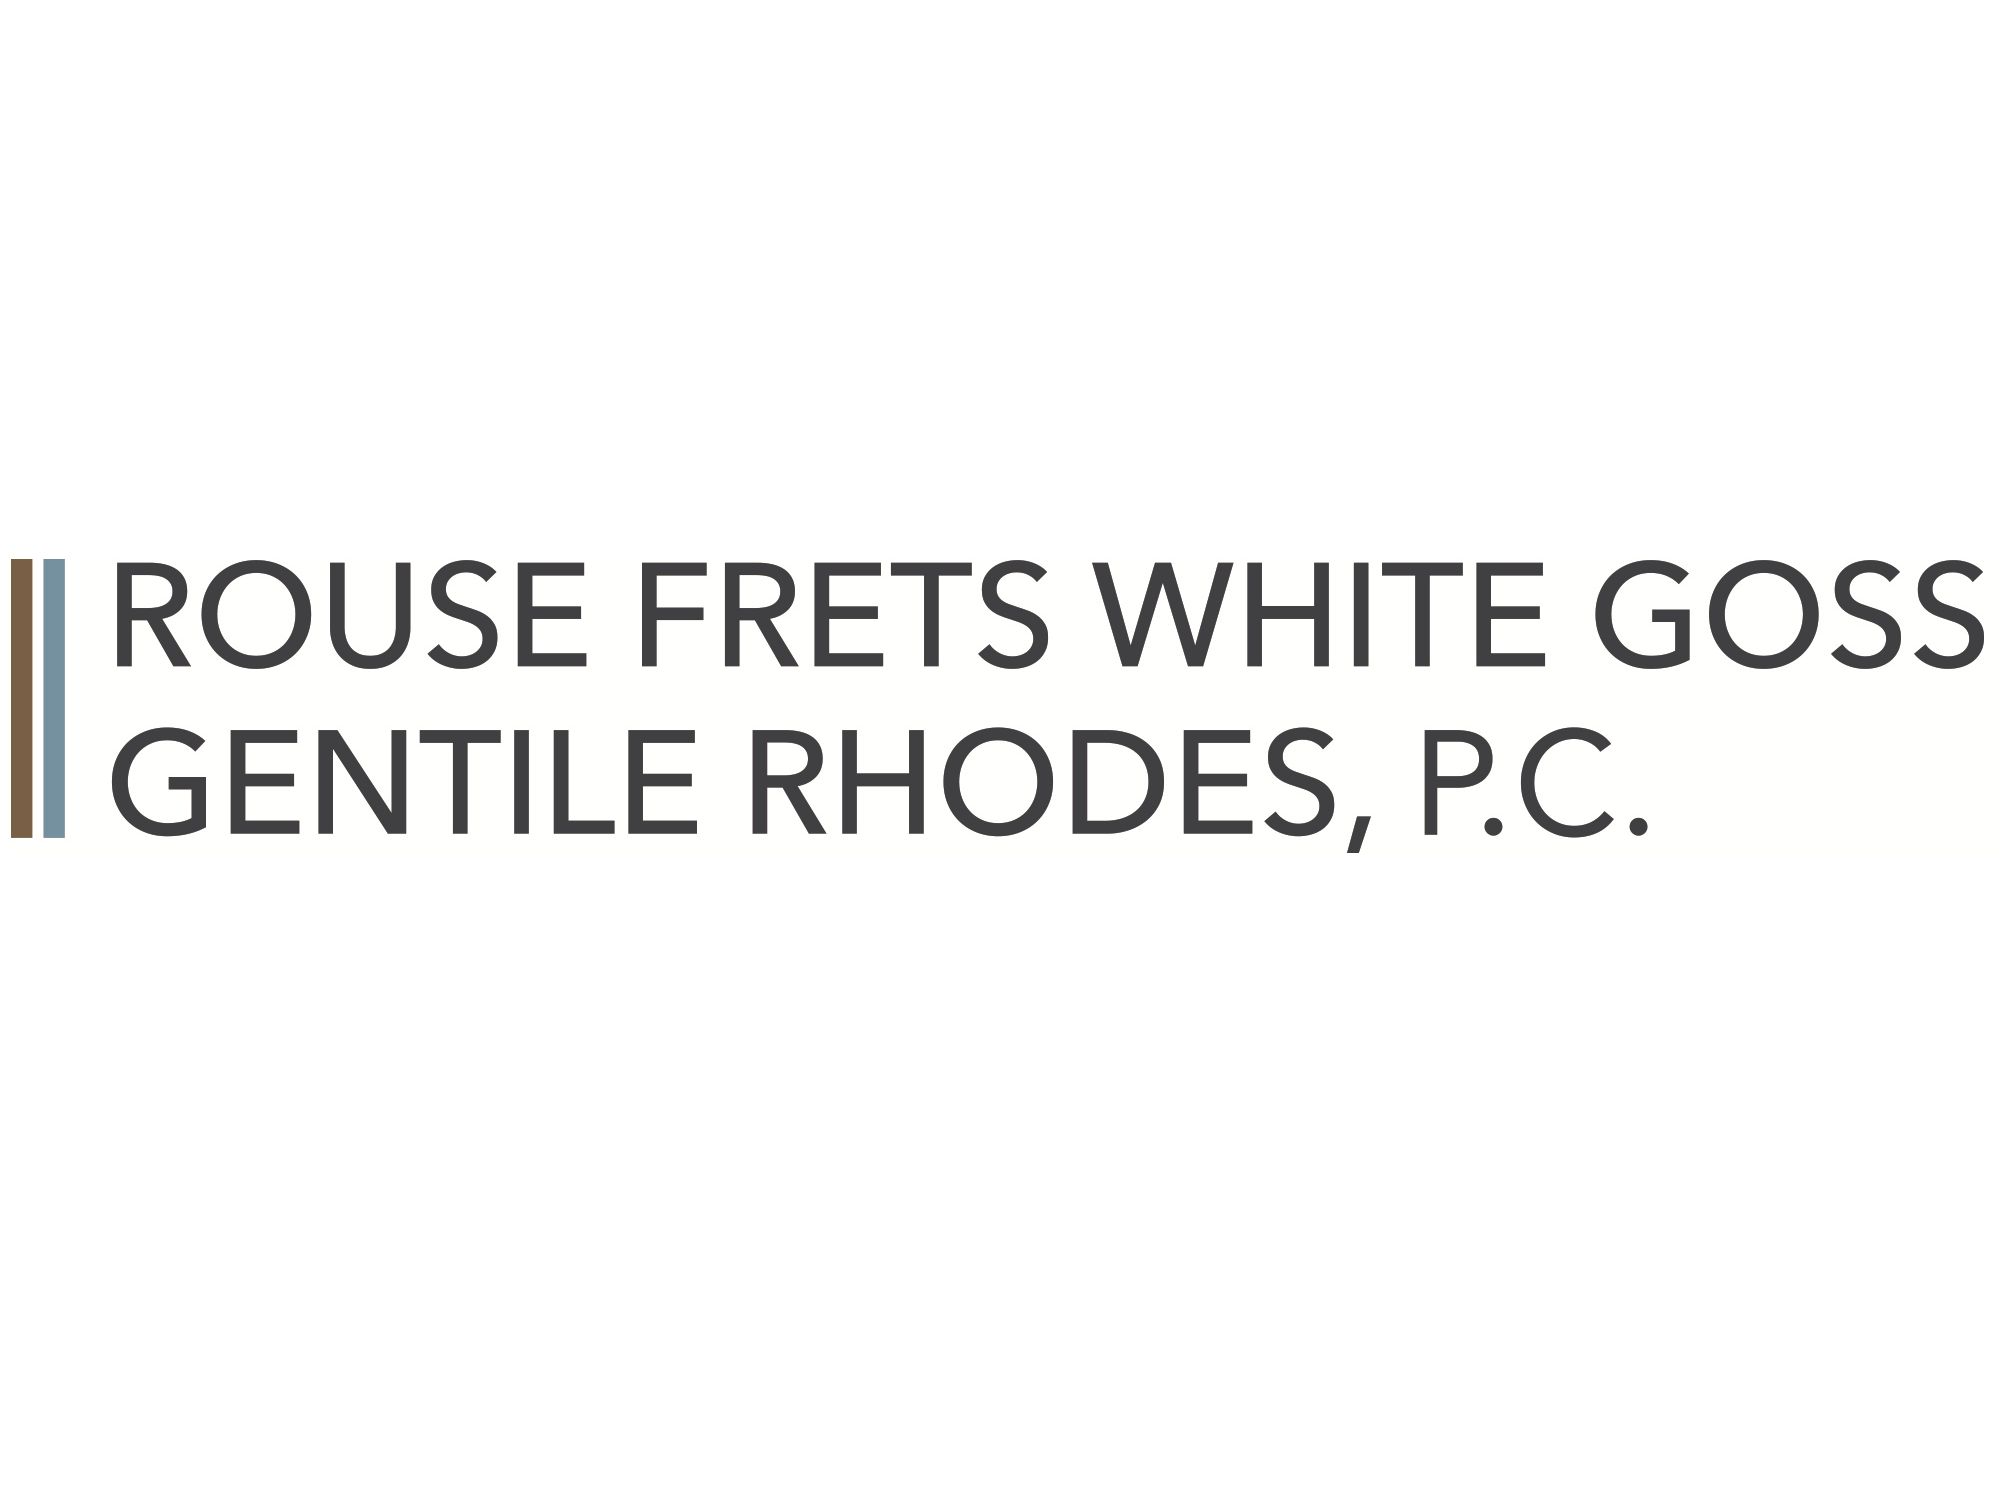 Rouse Frets White Goss Gentile Rhodes, P.C. Logo